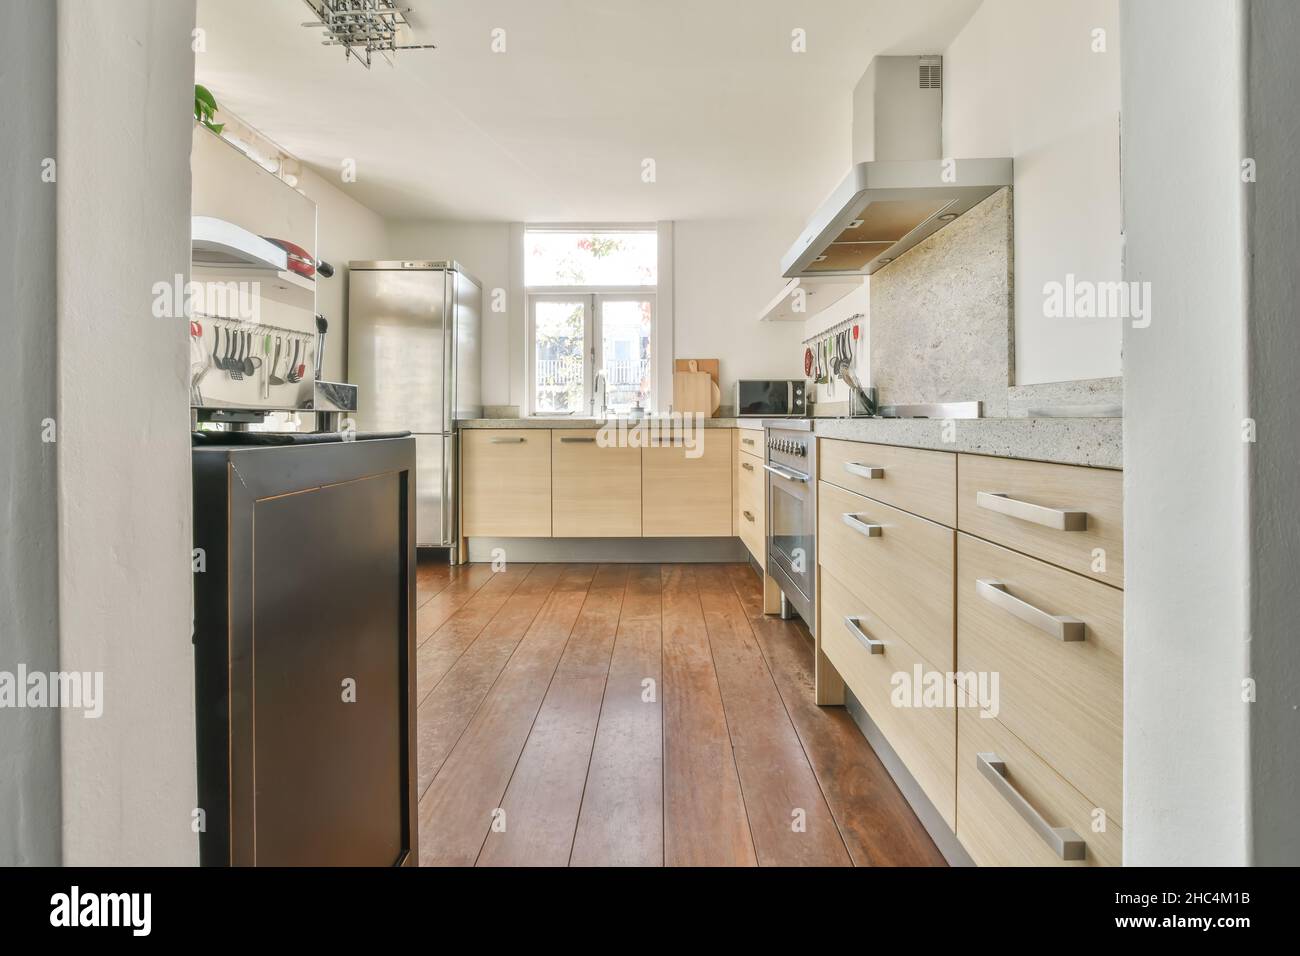 Amplia cocina interior de lujo con electrodomésticos modernos Foto de stock